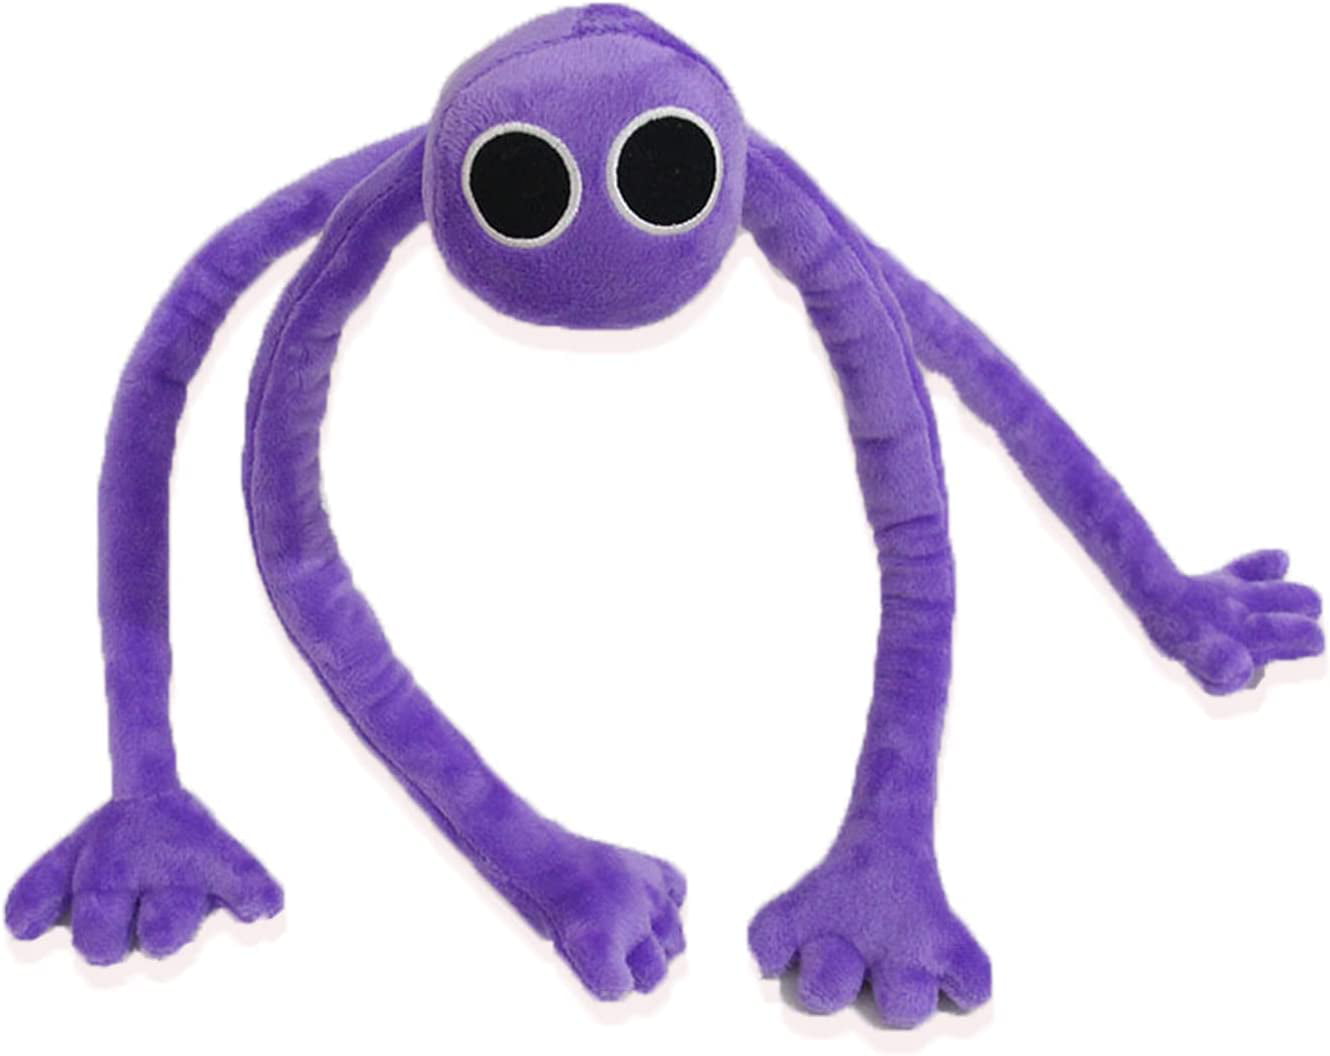 Brand New Rainbow Friends Purple Plush Toy Soft Stuffed Animal